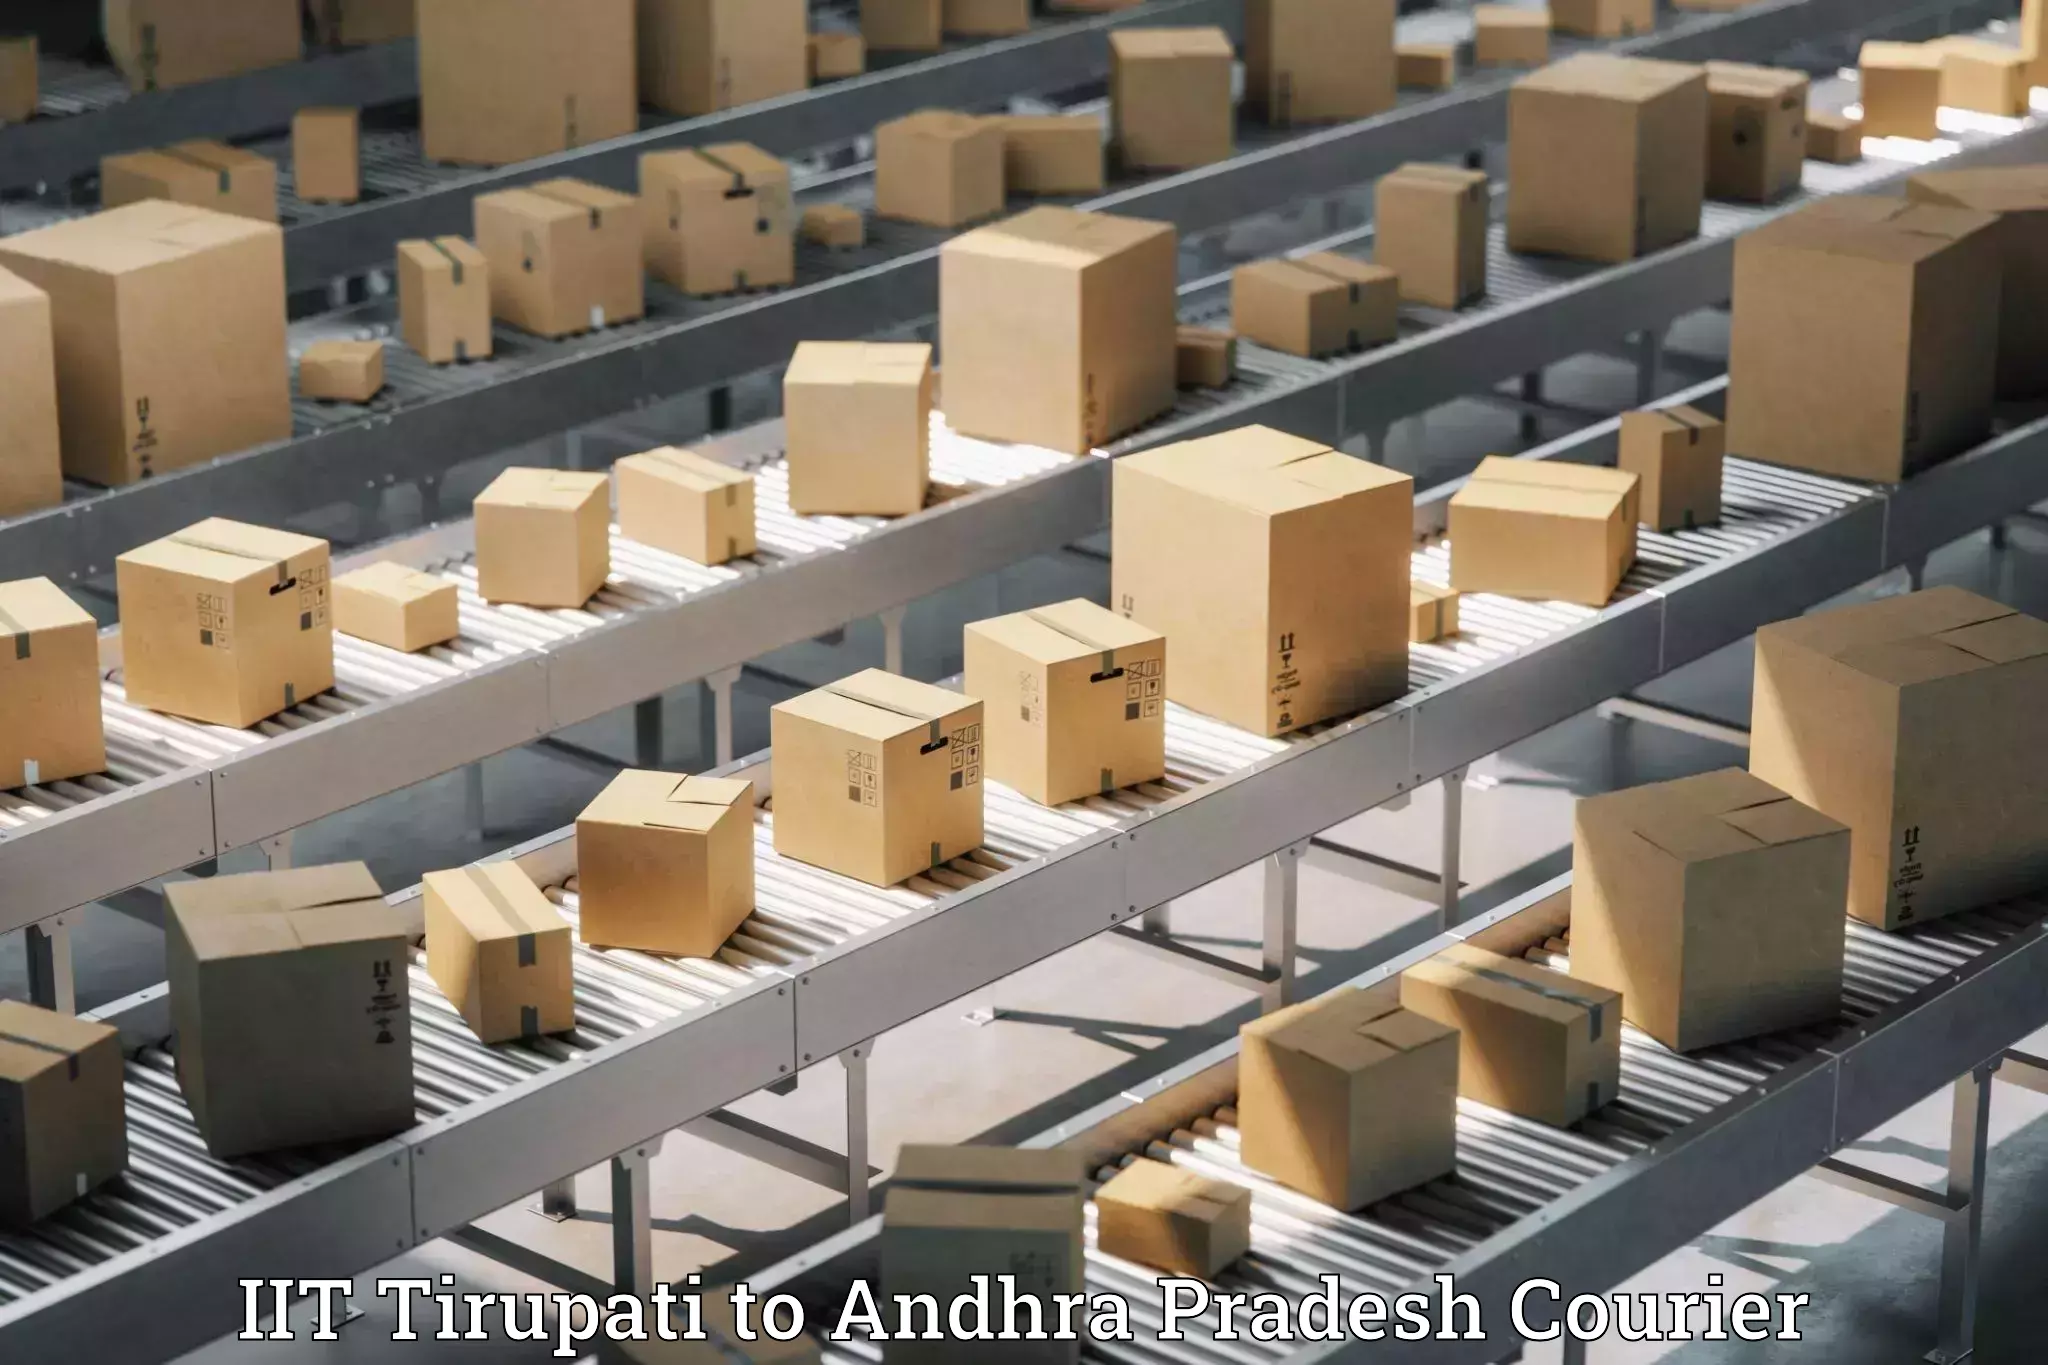 24-hour courier service IIT Tirupati to Guntur